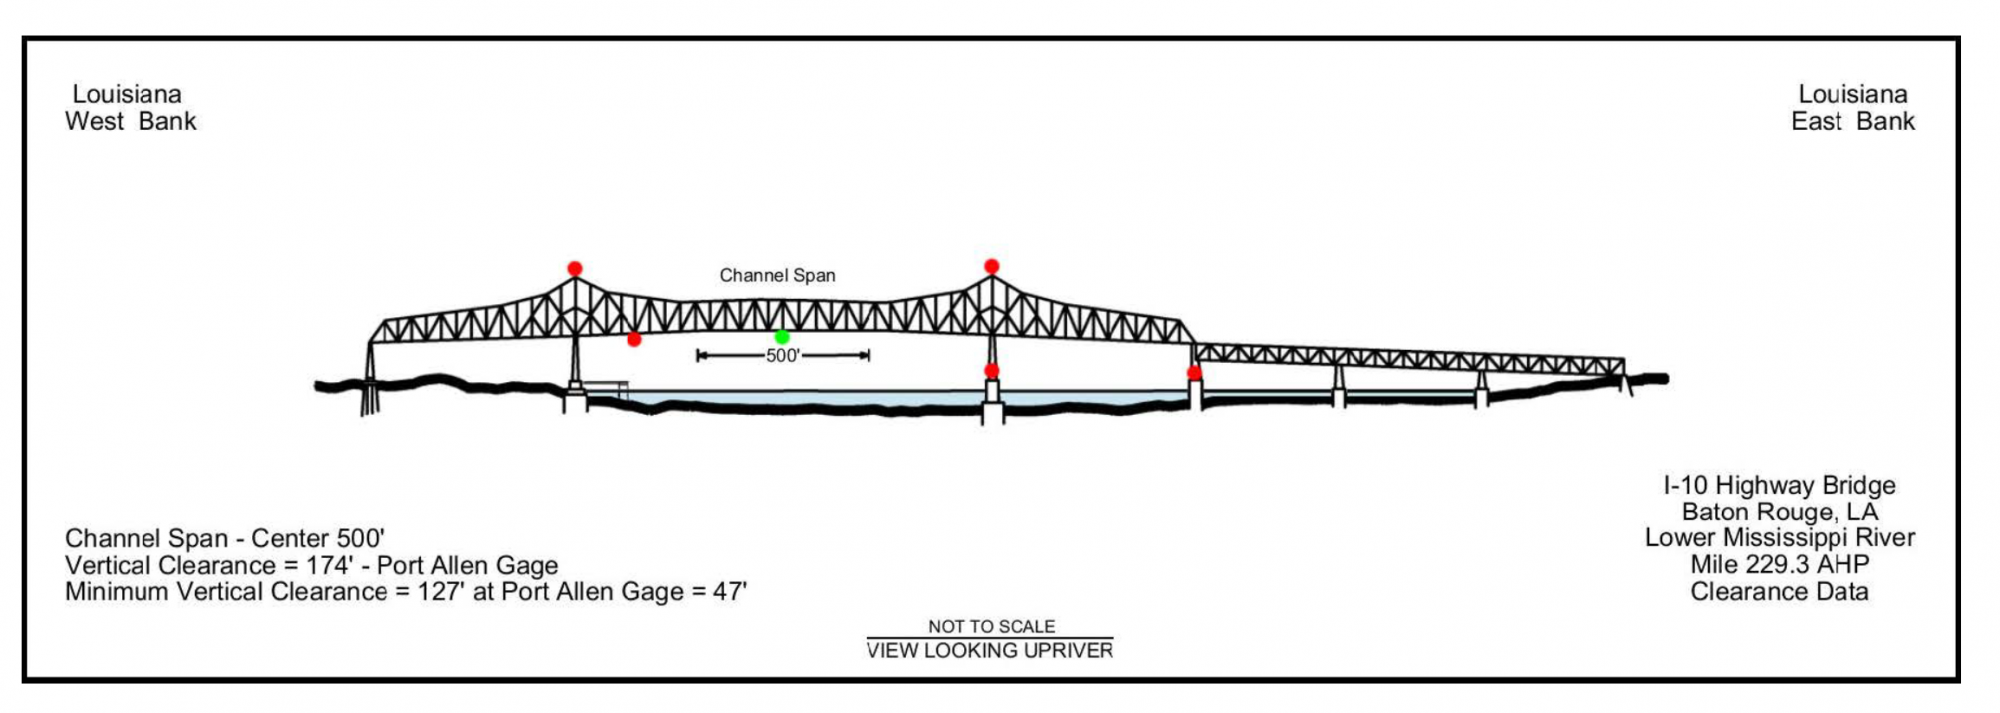 I-10 Highway Brige Clearances | Bridge Calculator LLC